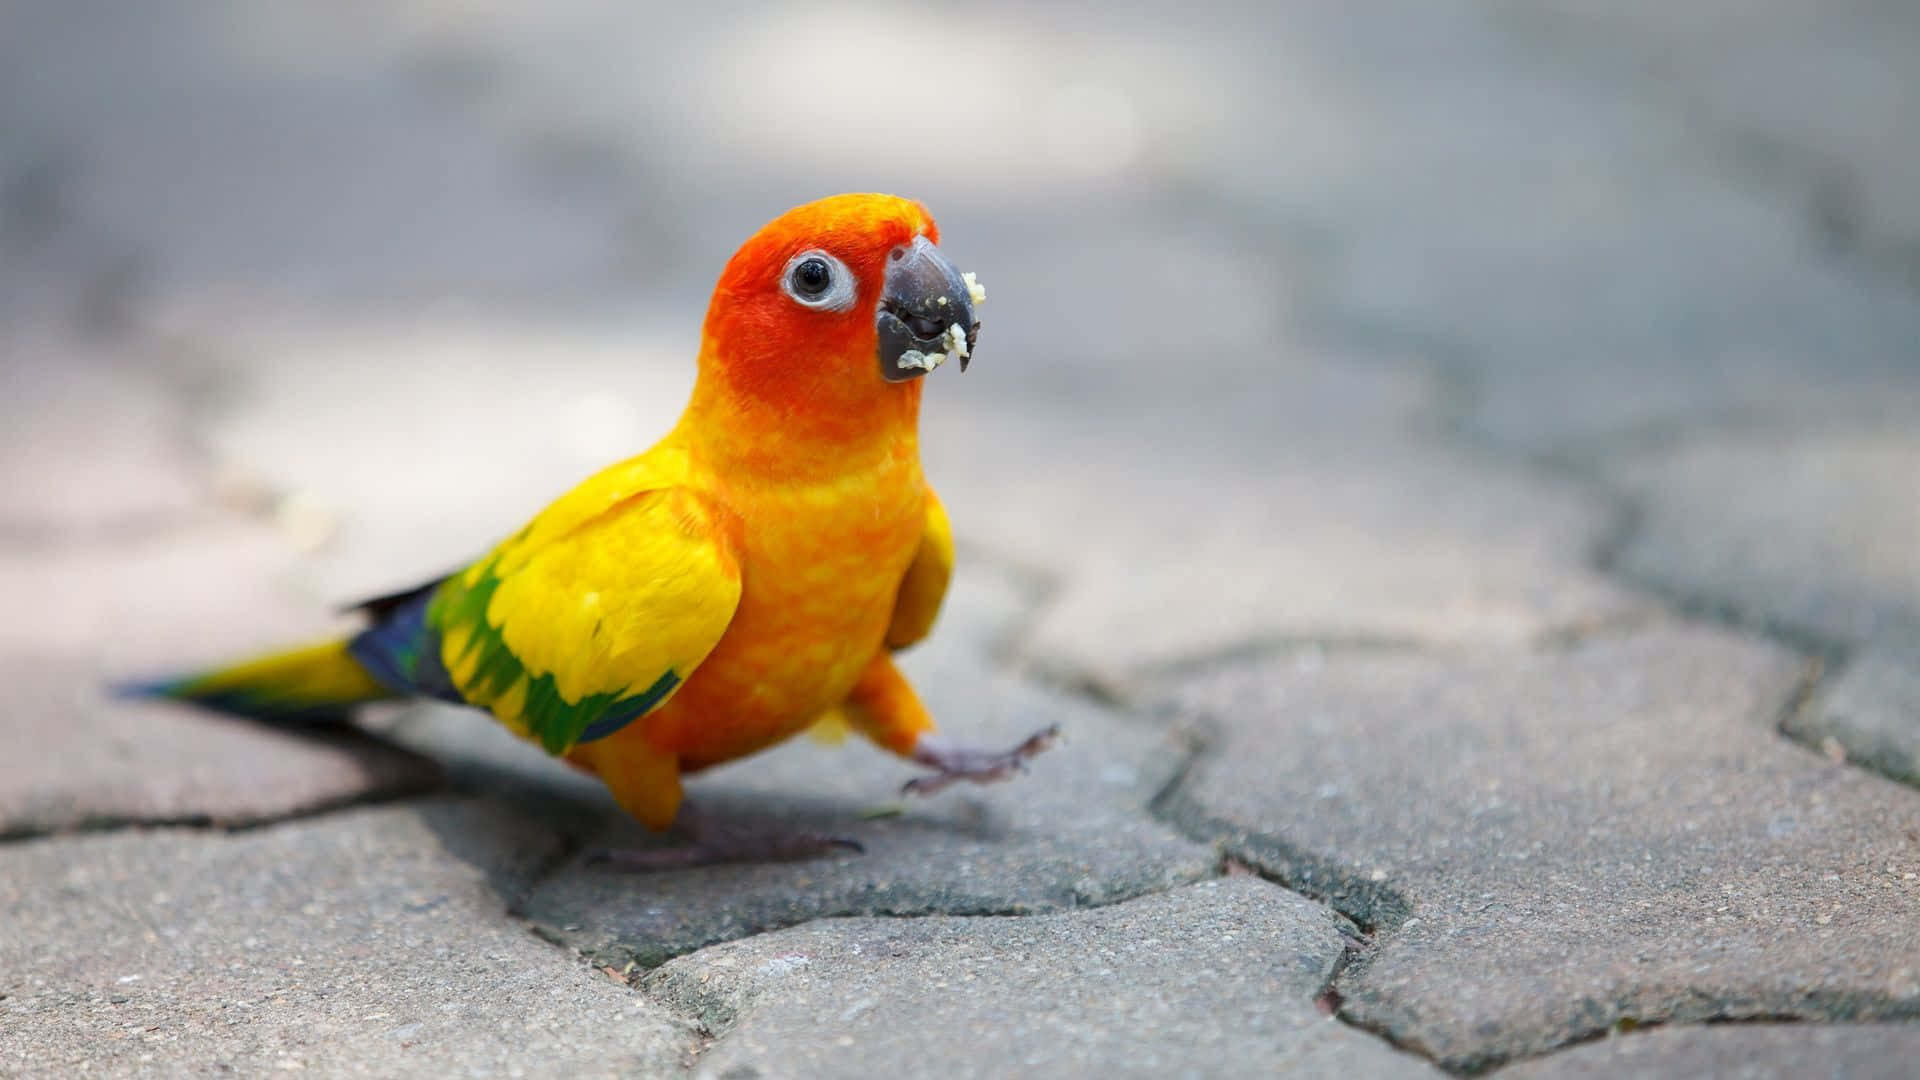 A sweet little bird just looking for a friend